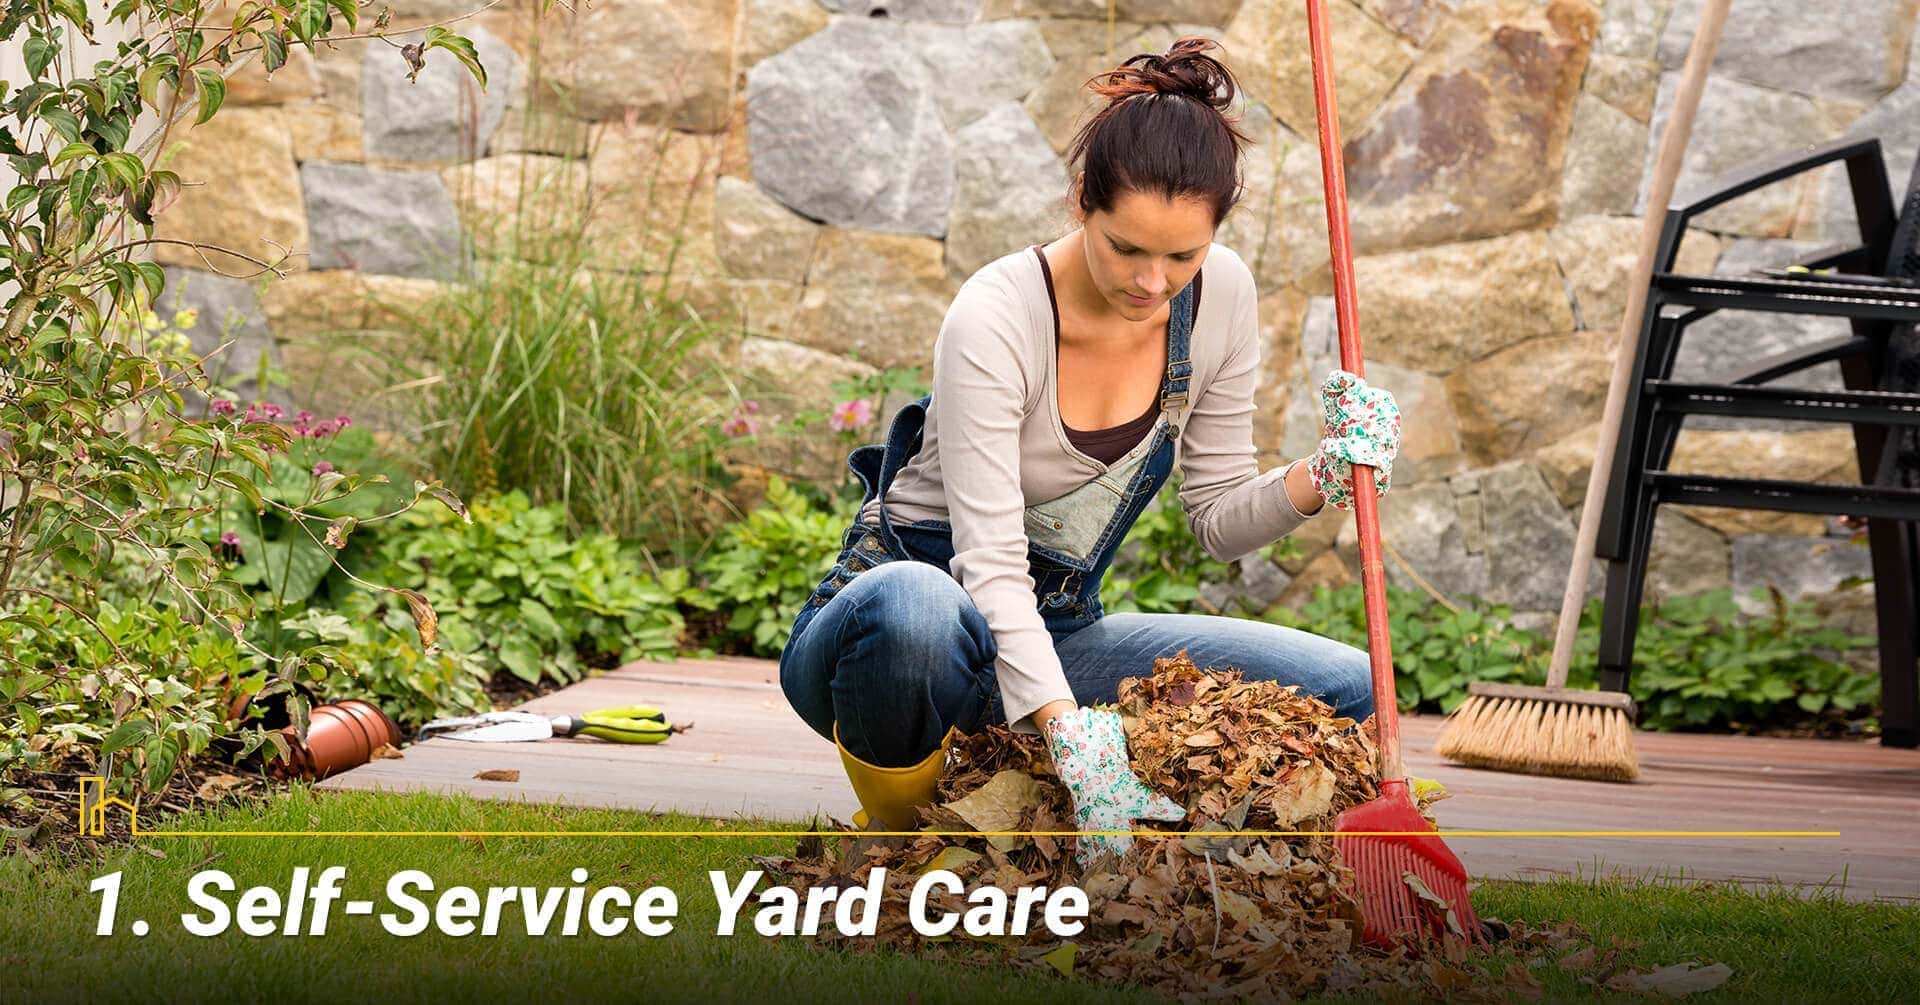 Self-Service Yard Care, doing your own yard work